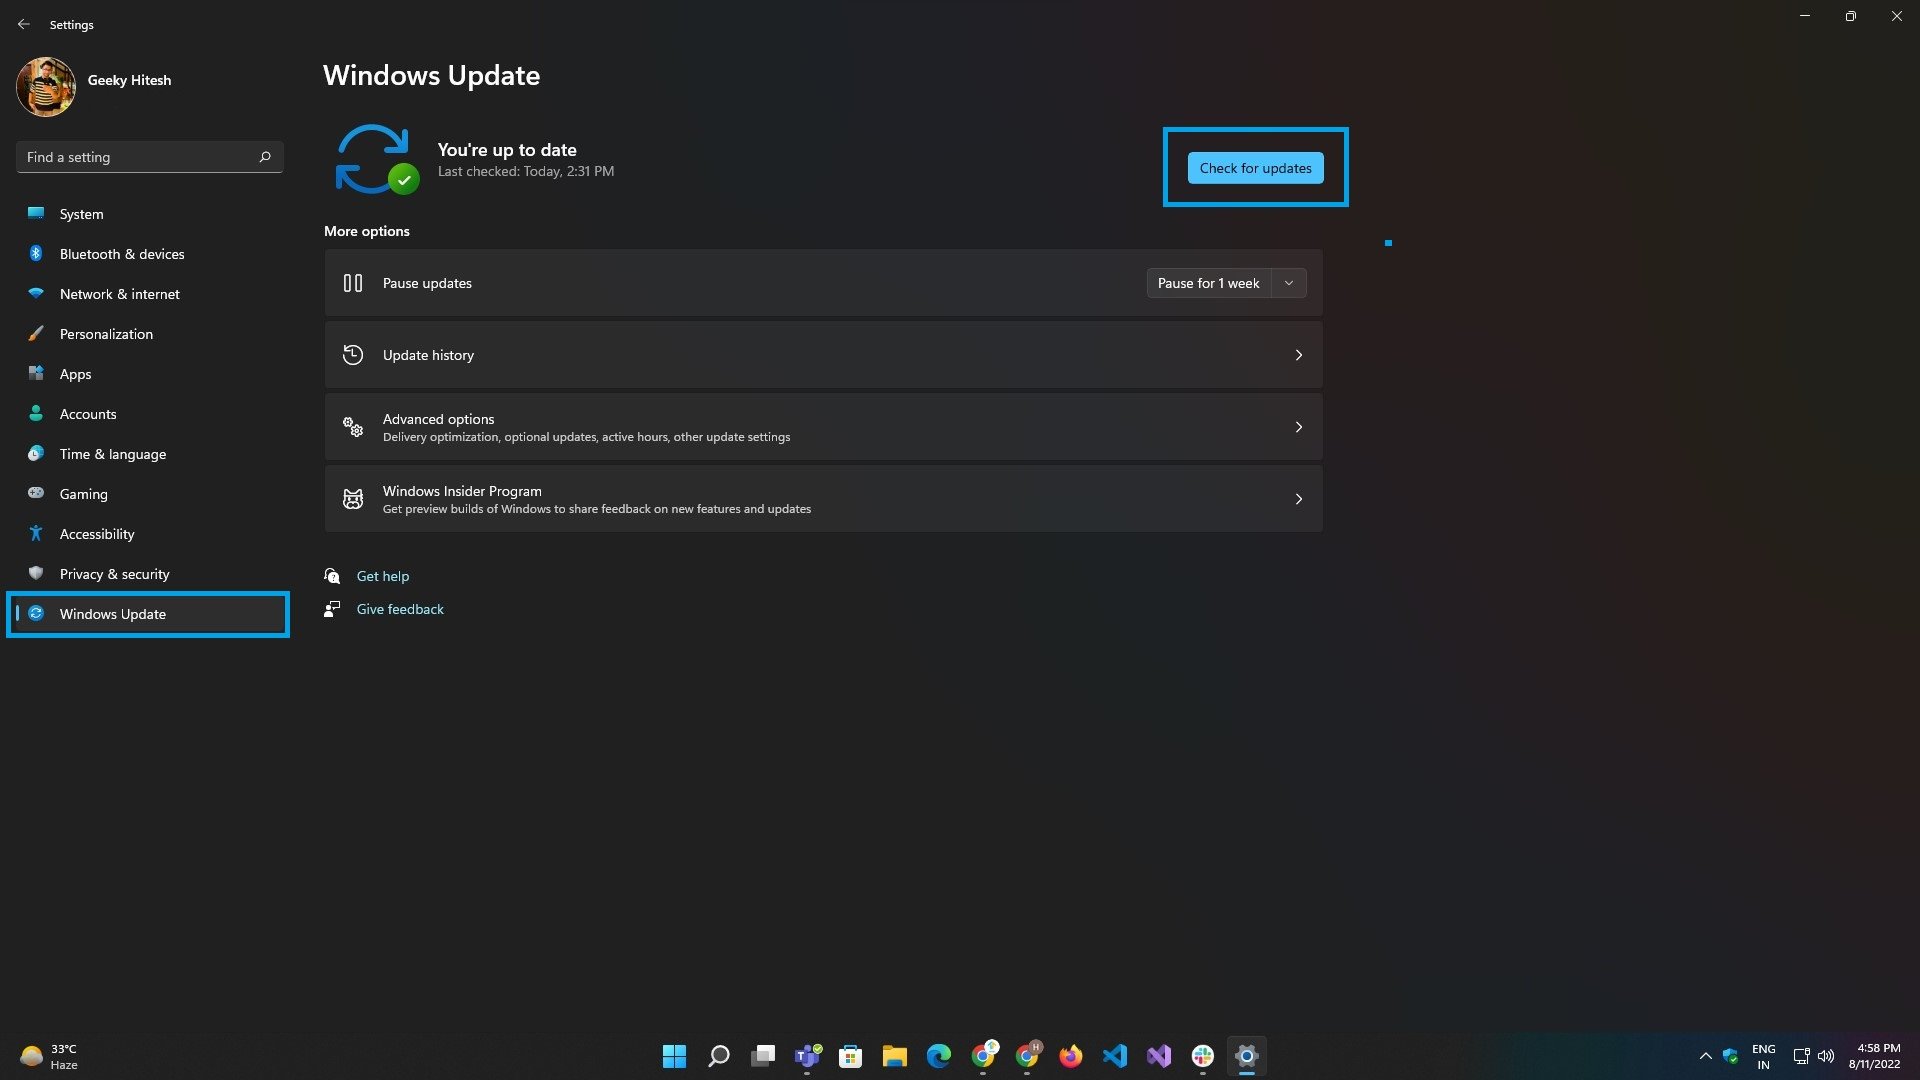 windows update page in settings app